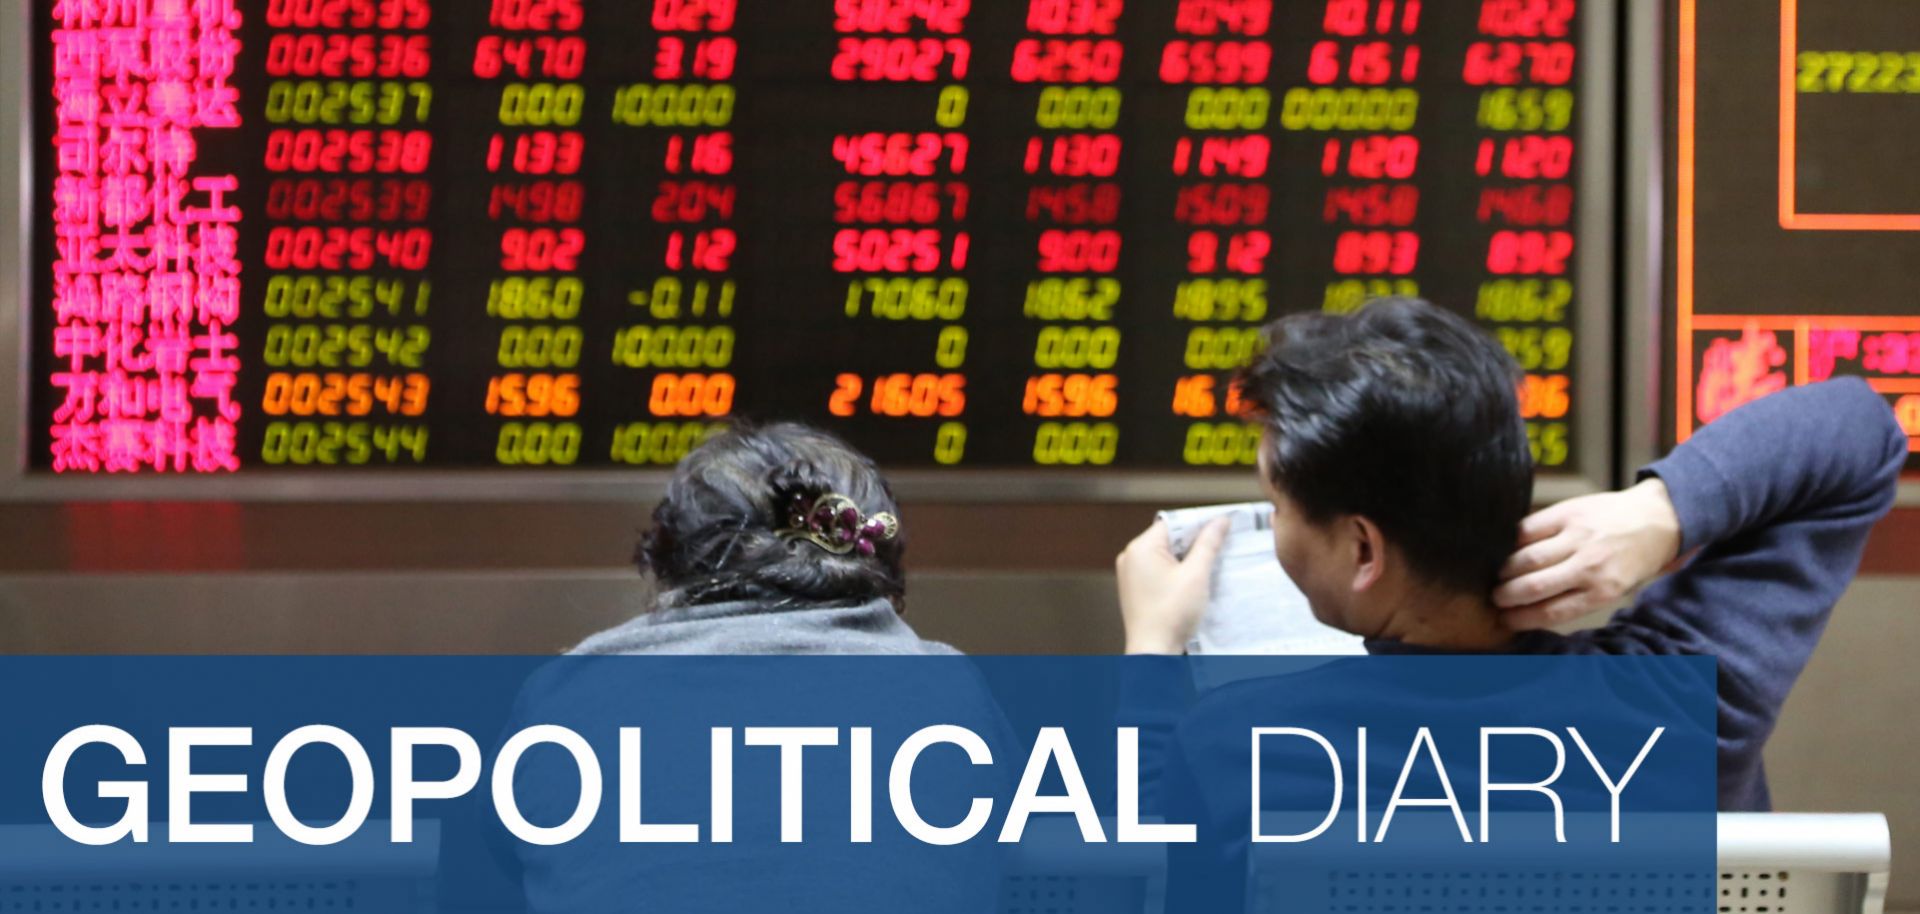 Investors observe stock market data at an exchange hall in Beijing.